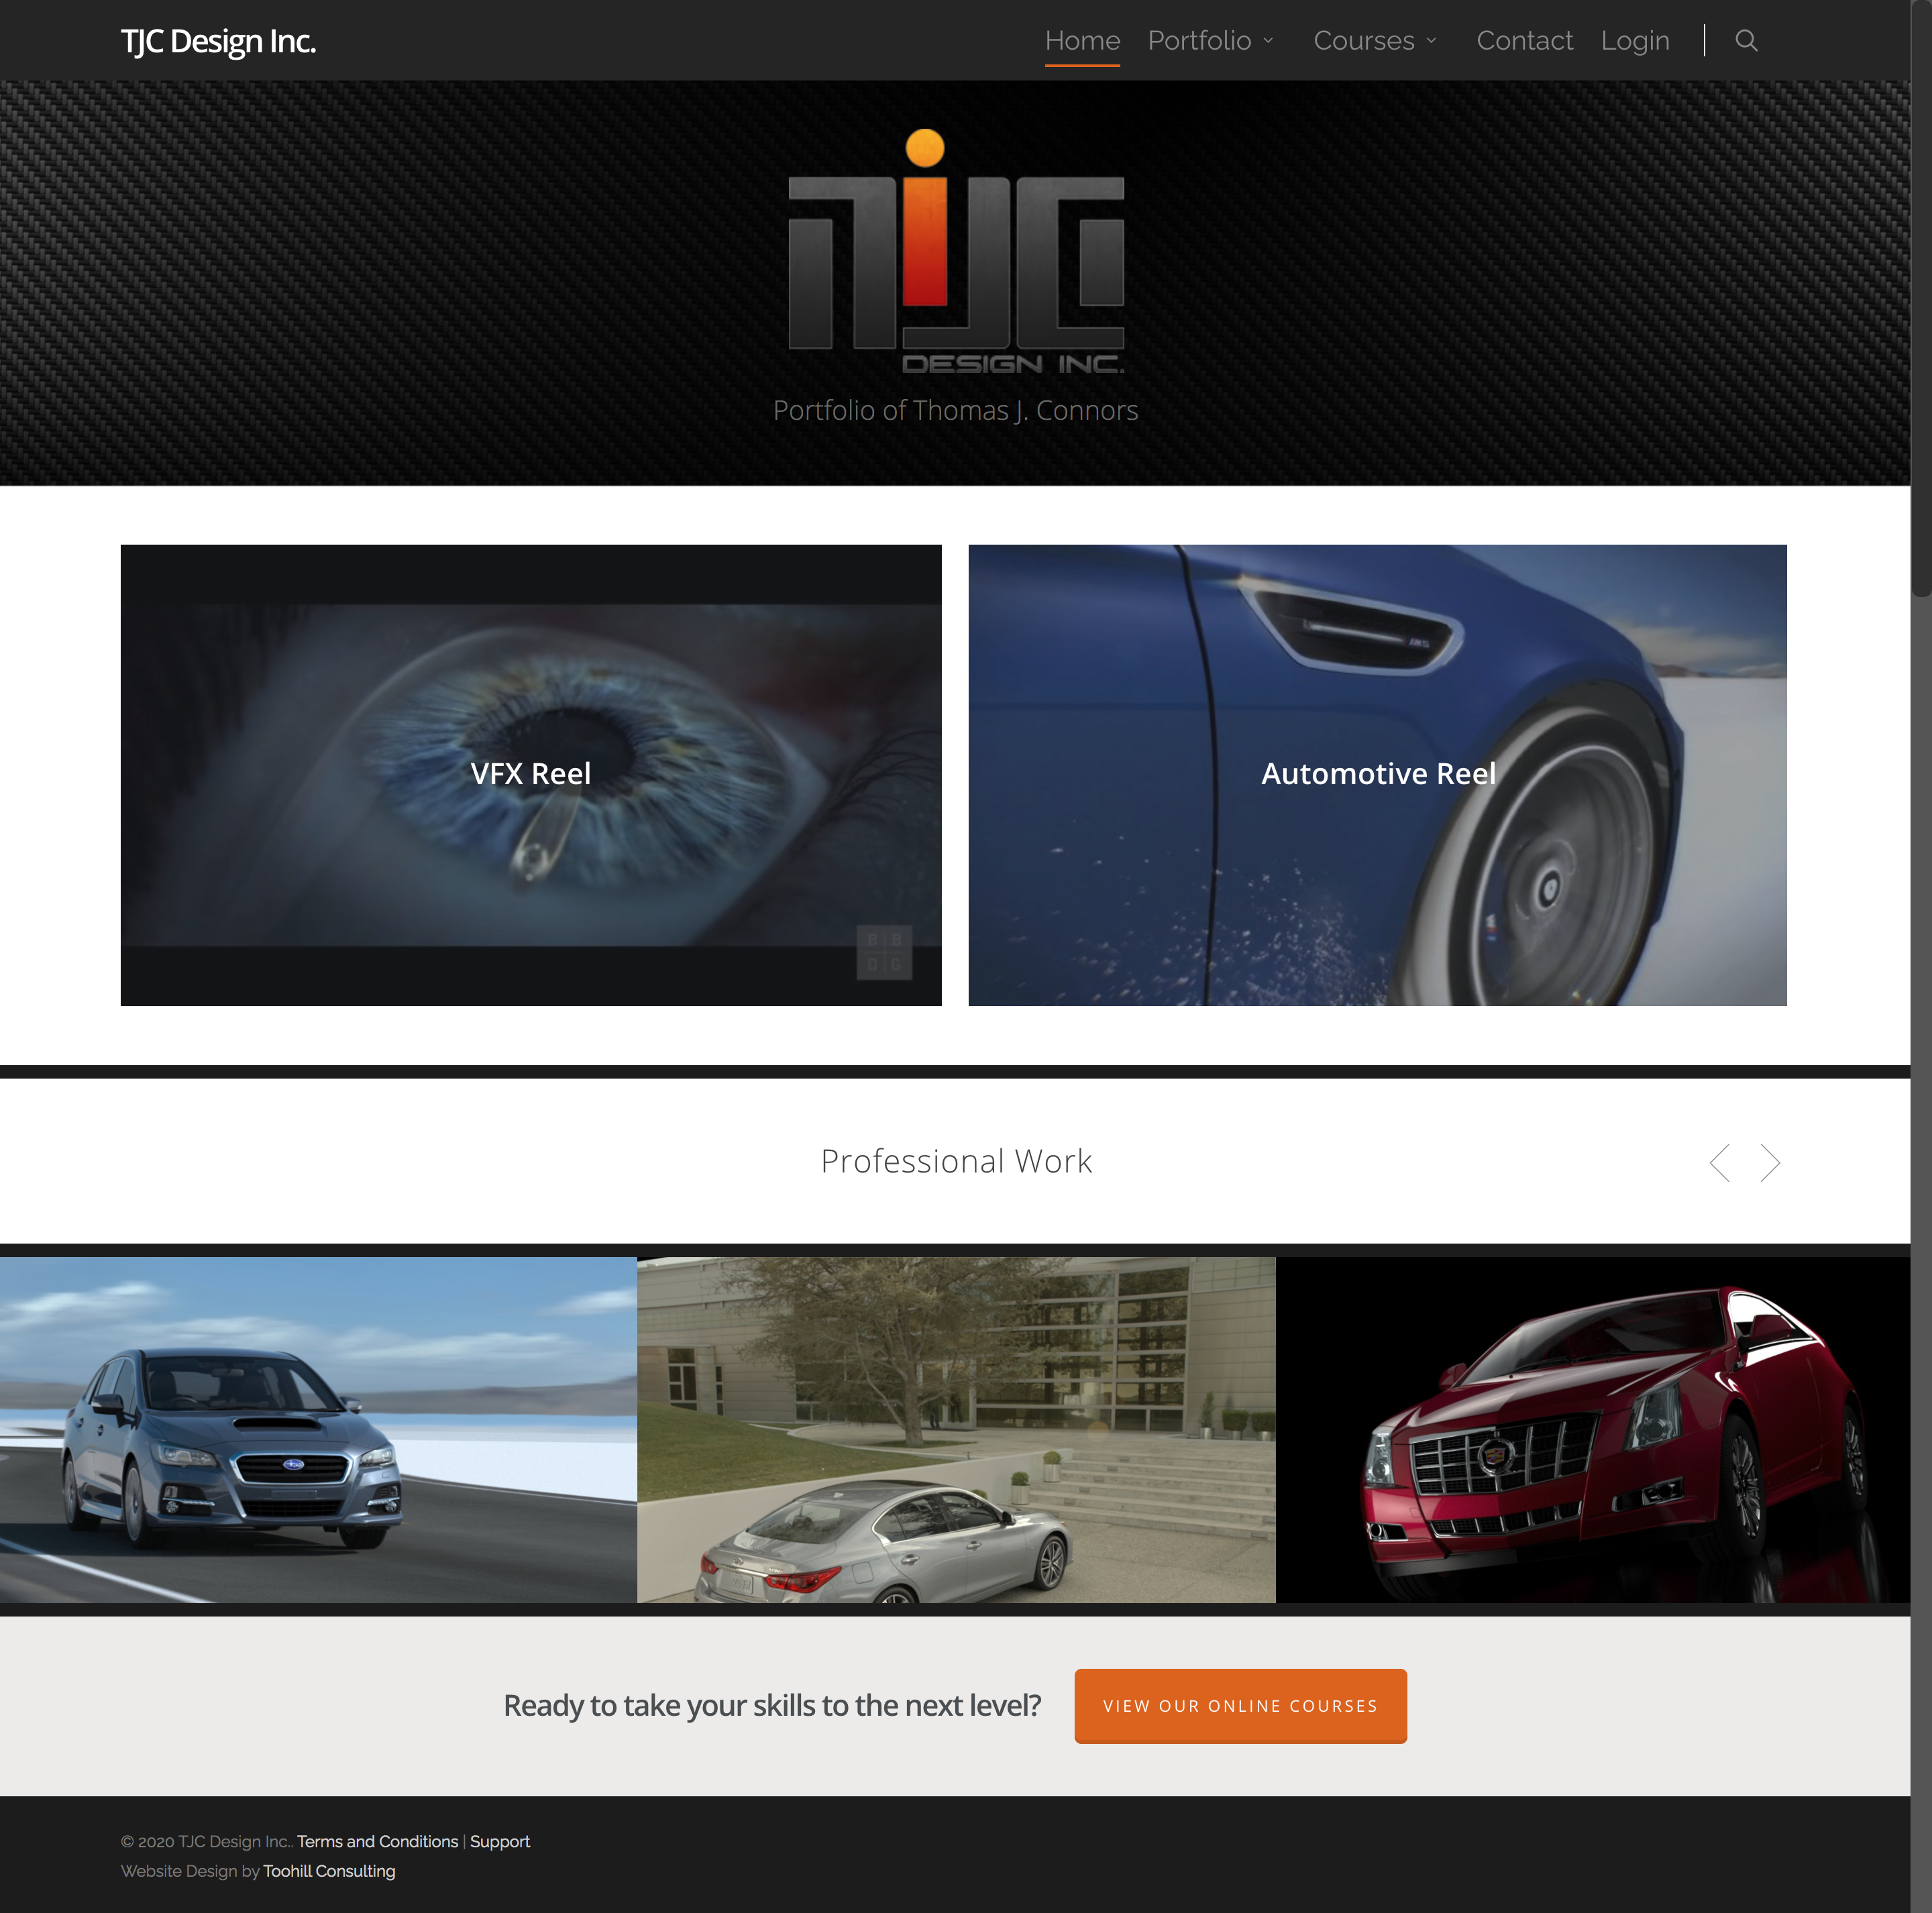 TJC Design Inc. Website Homepage